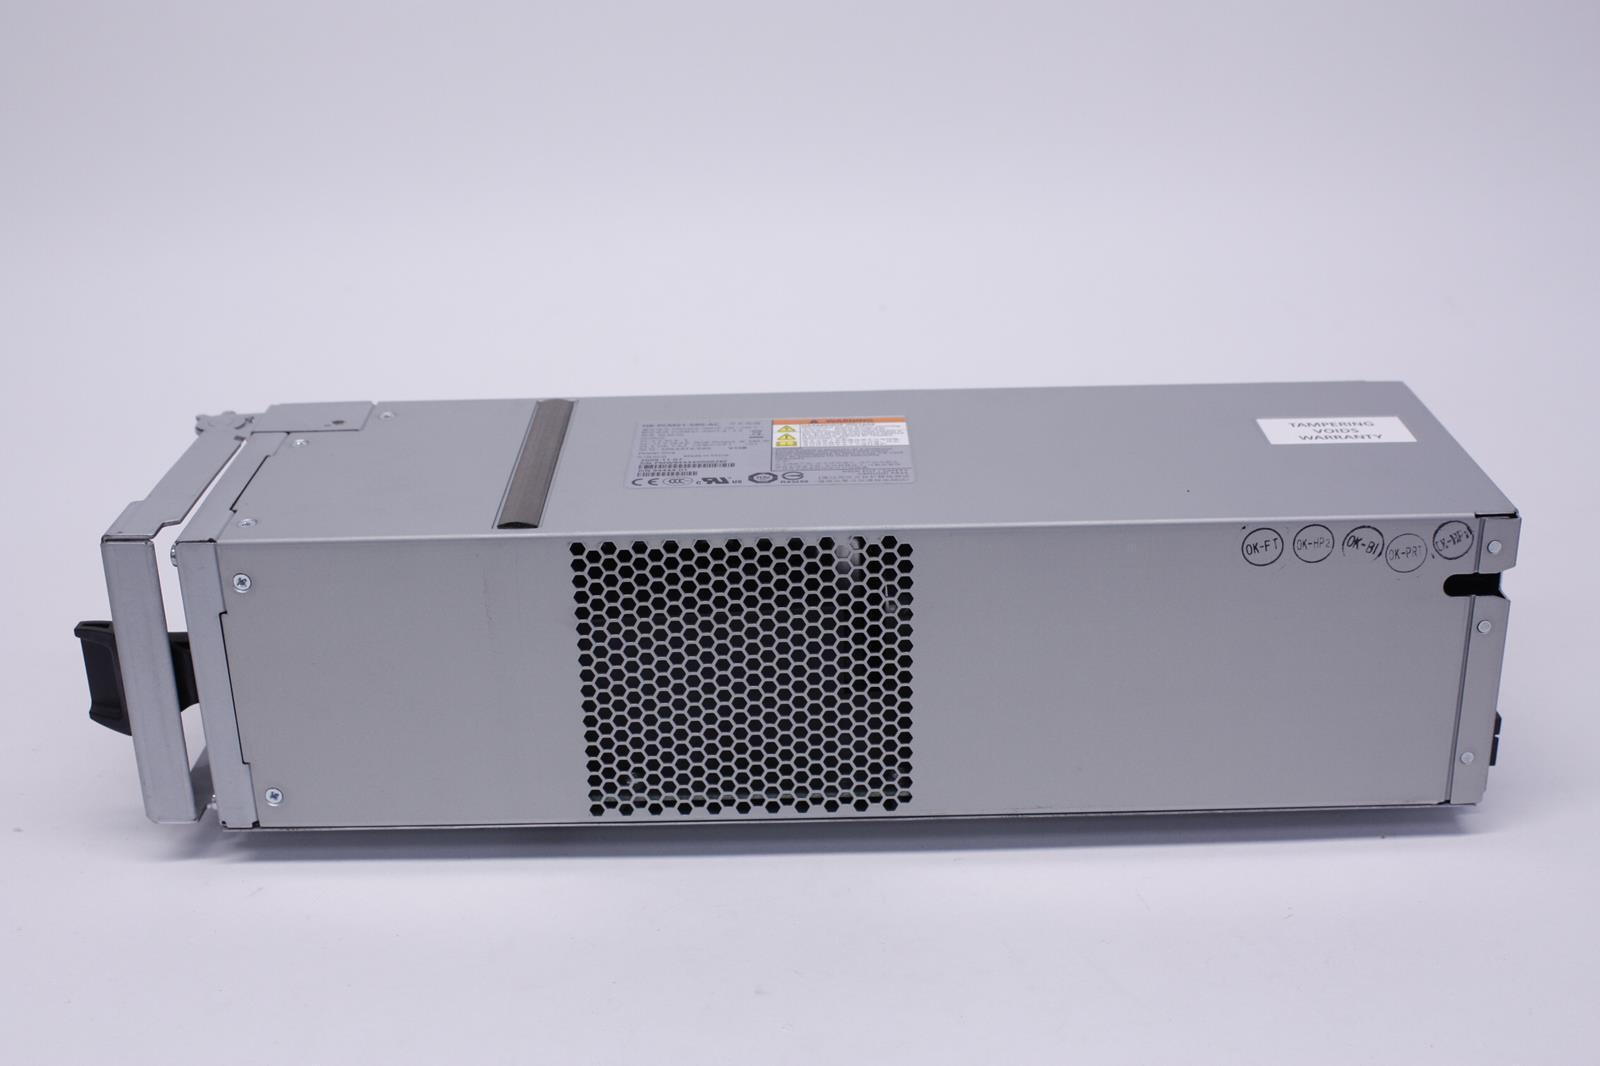 DELL/XYRATEX COMPELLENT HB-PCM01-580-AC 580W POWER SUPPLY